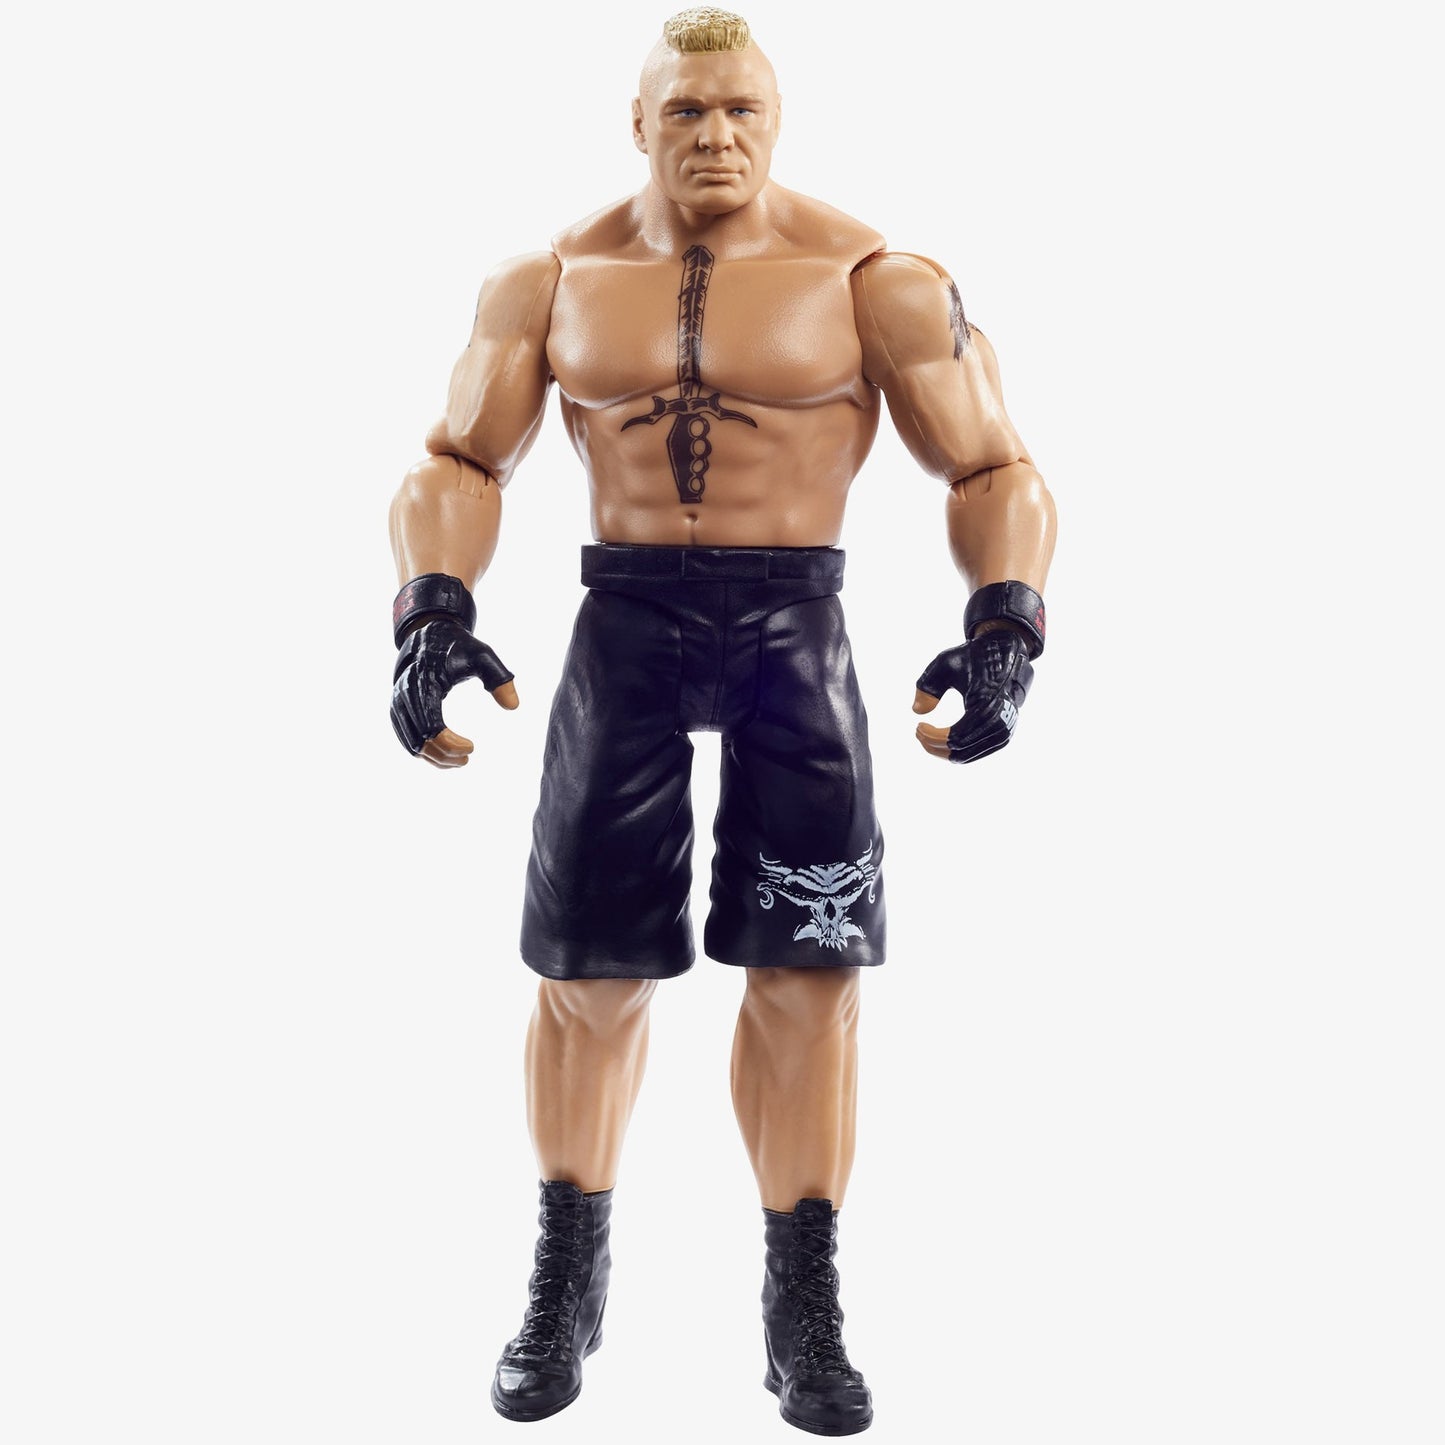 Brock Lesnar - WWE Basic Series #103